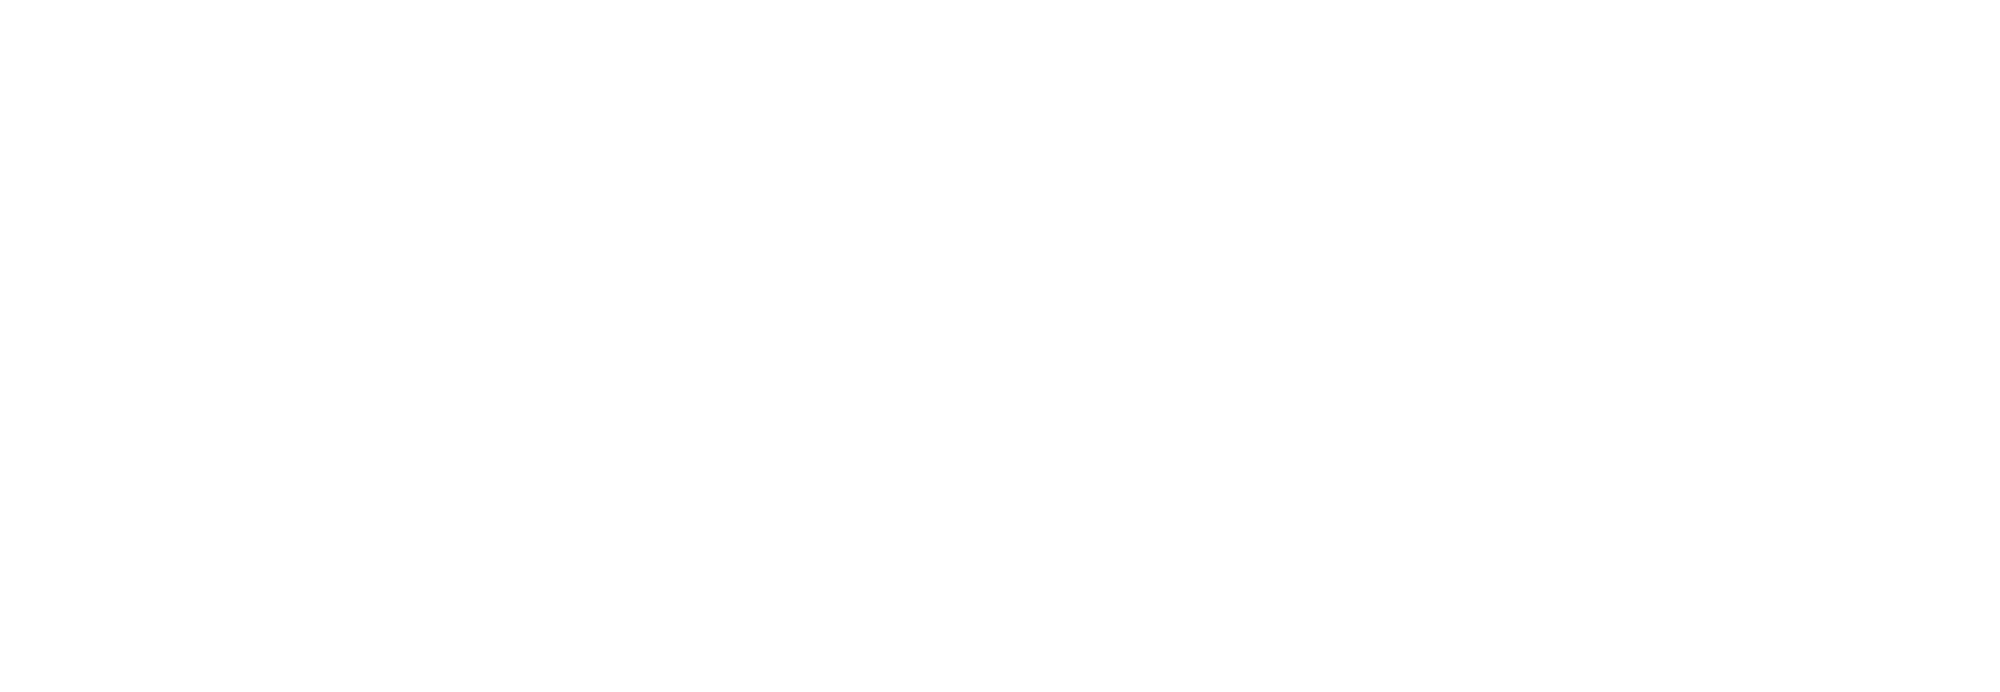 Osceola County Road Commission 